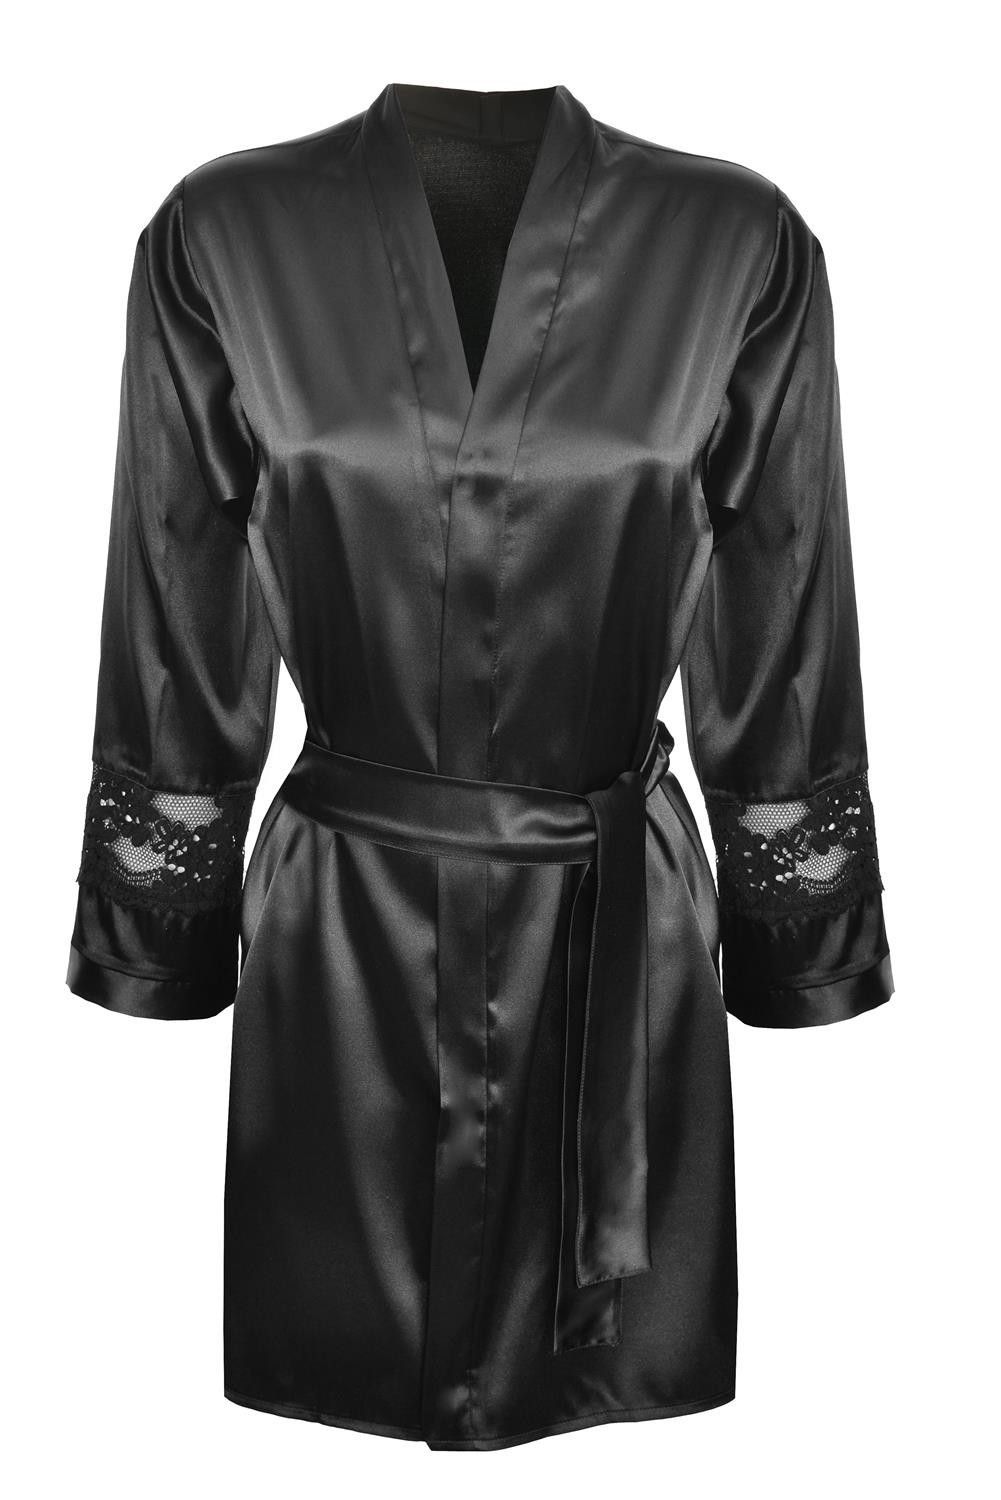 DKaren Housecoat Betty Black S černá